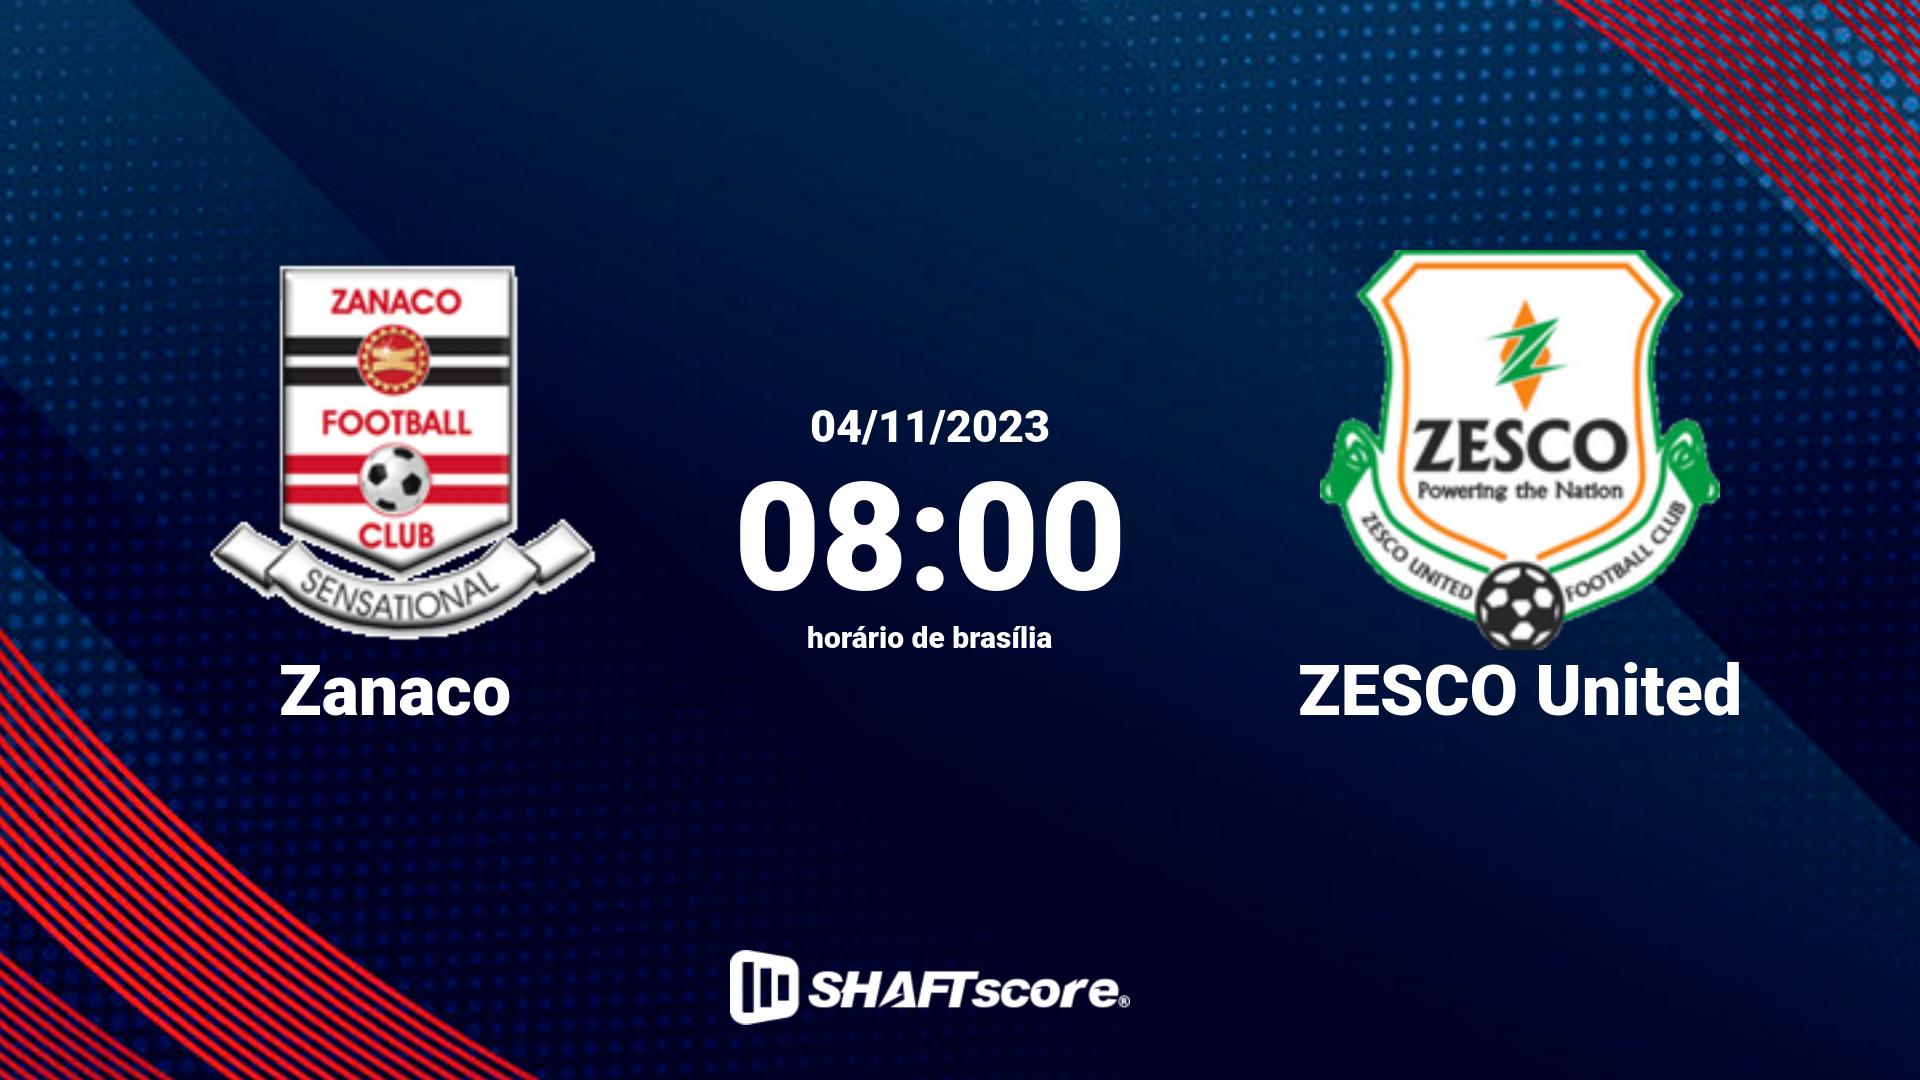 Estatísticas do jogo Zanaco vs ZESCO United 04.11 08:00